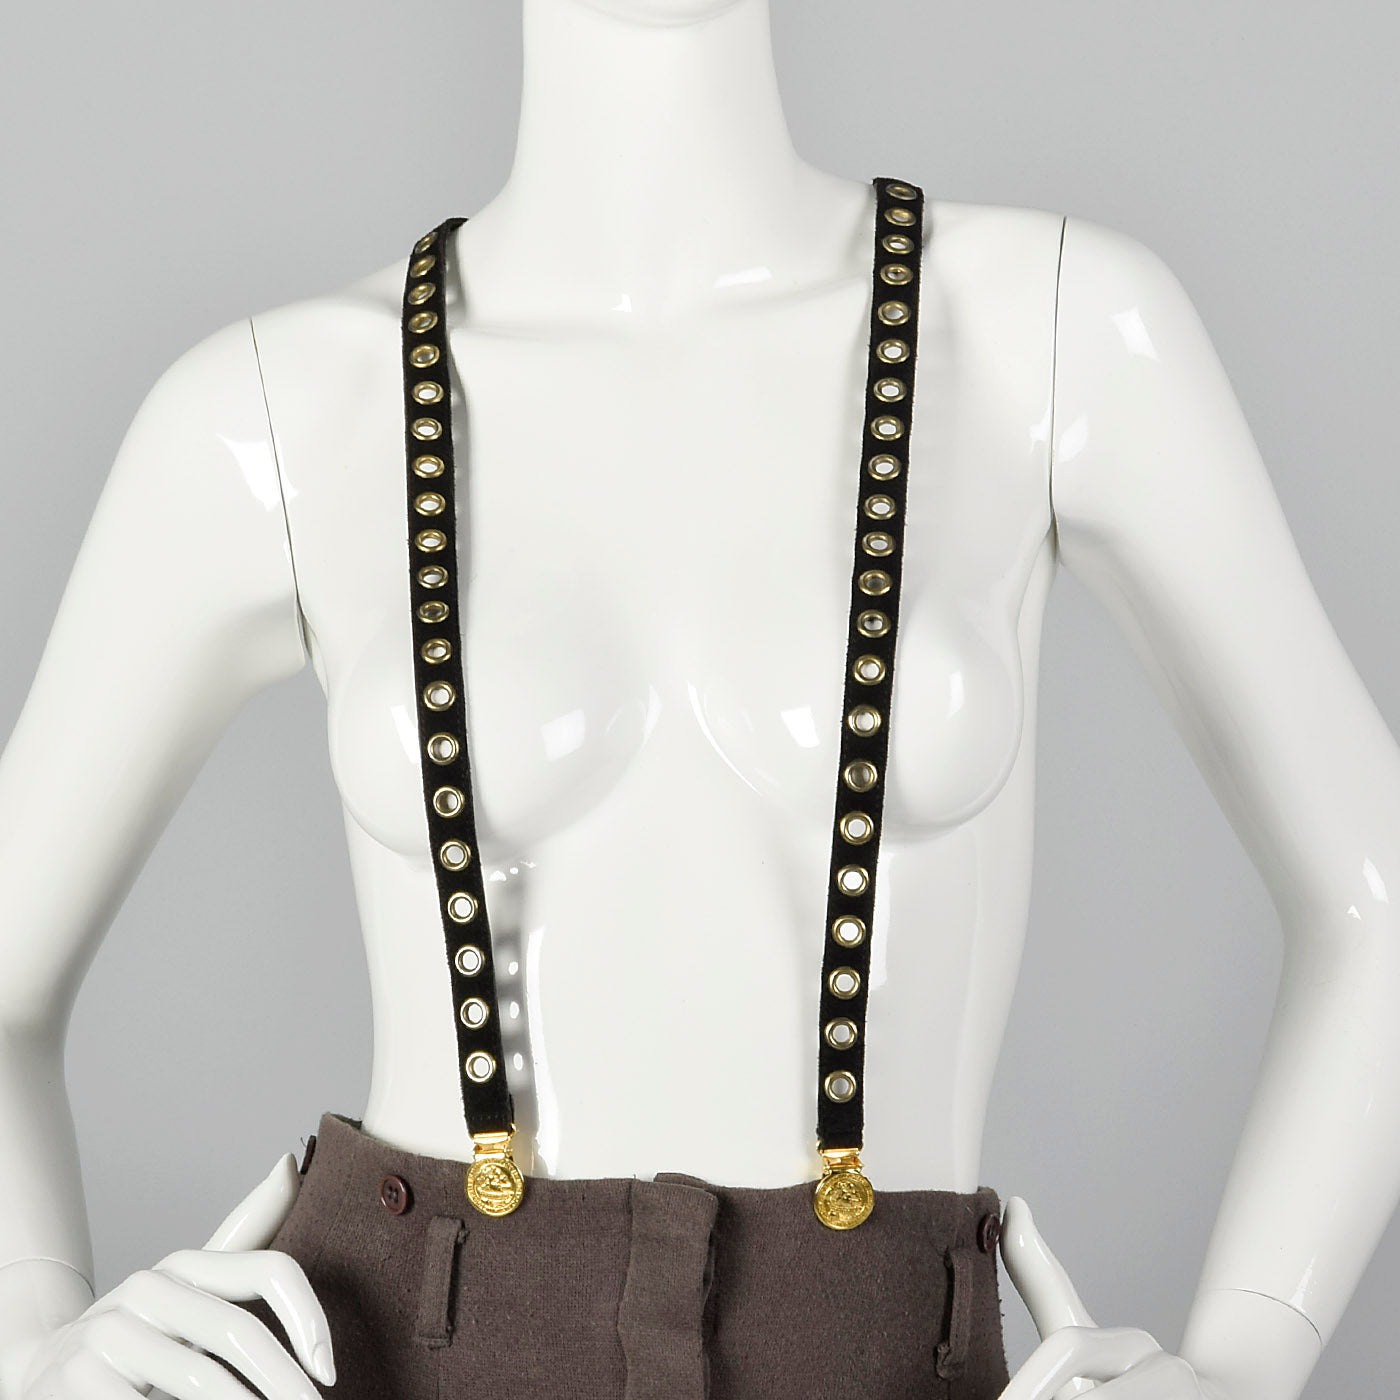 Sonia Rykiel Black Suede Suspenders with Gold Eyelets